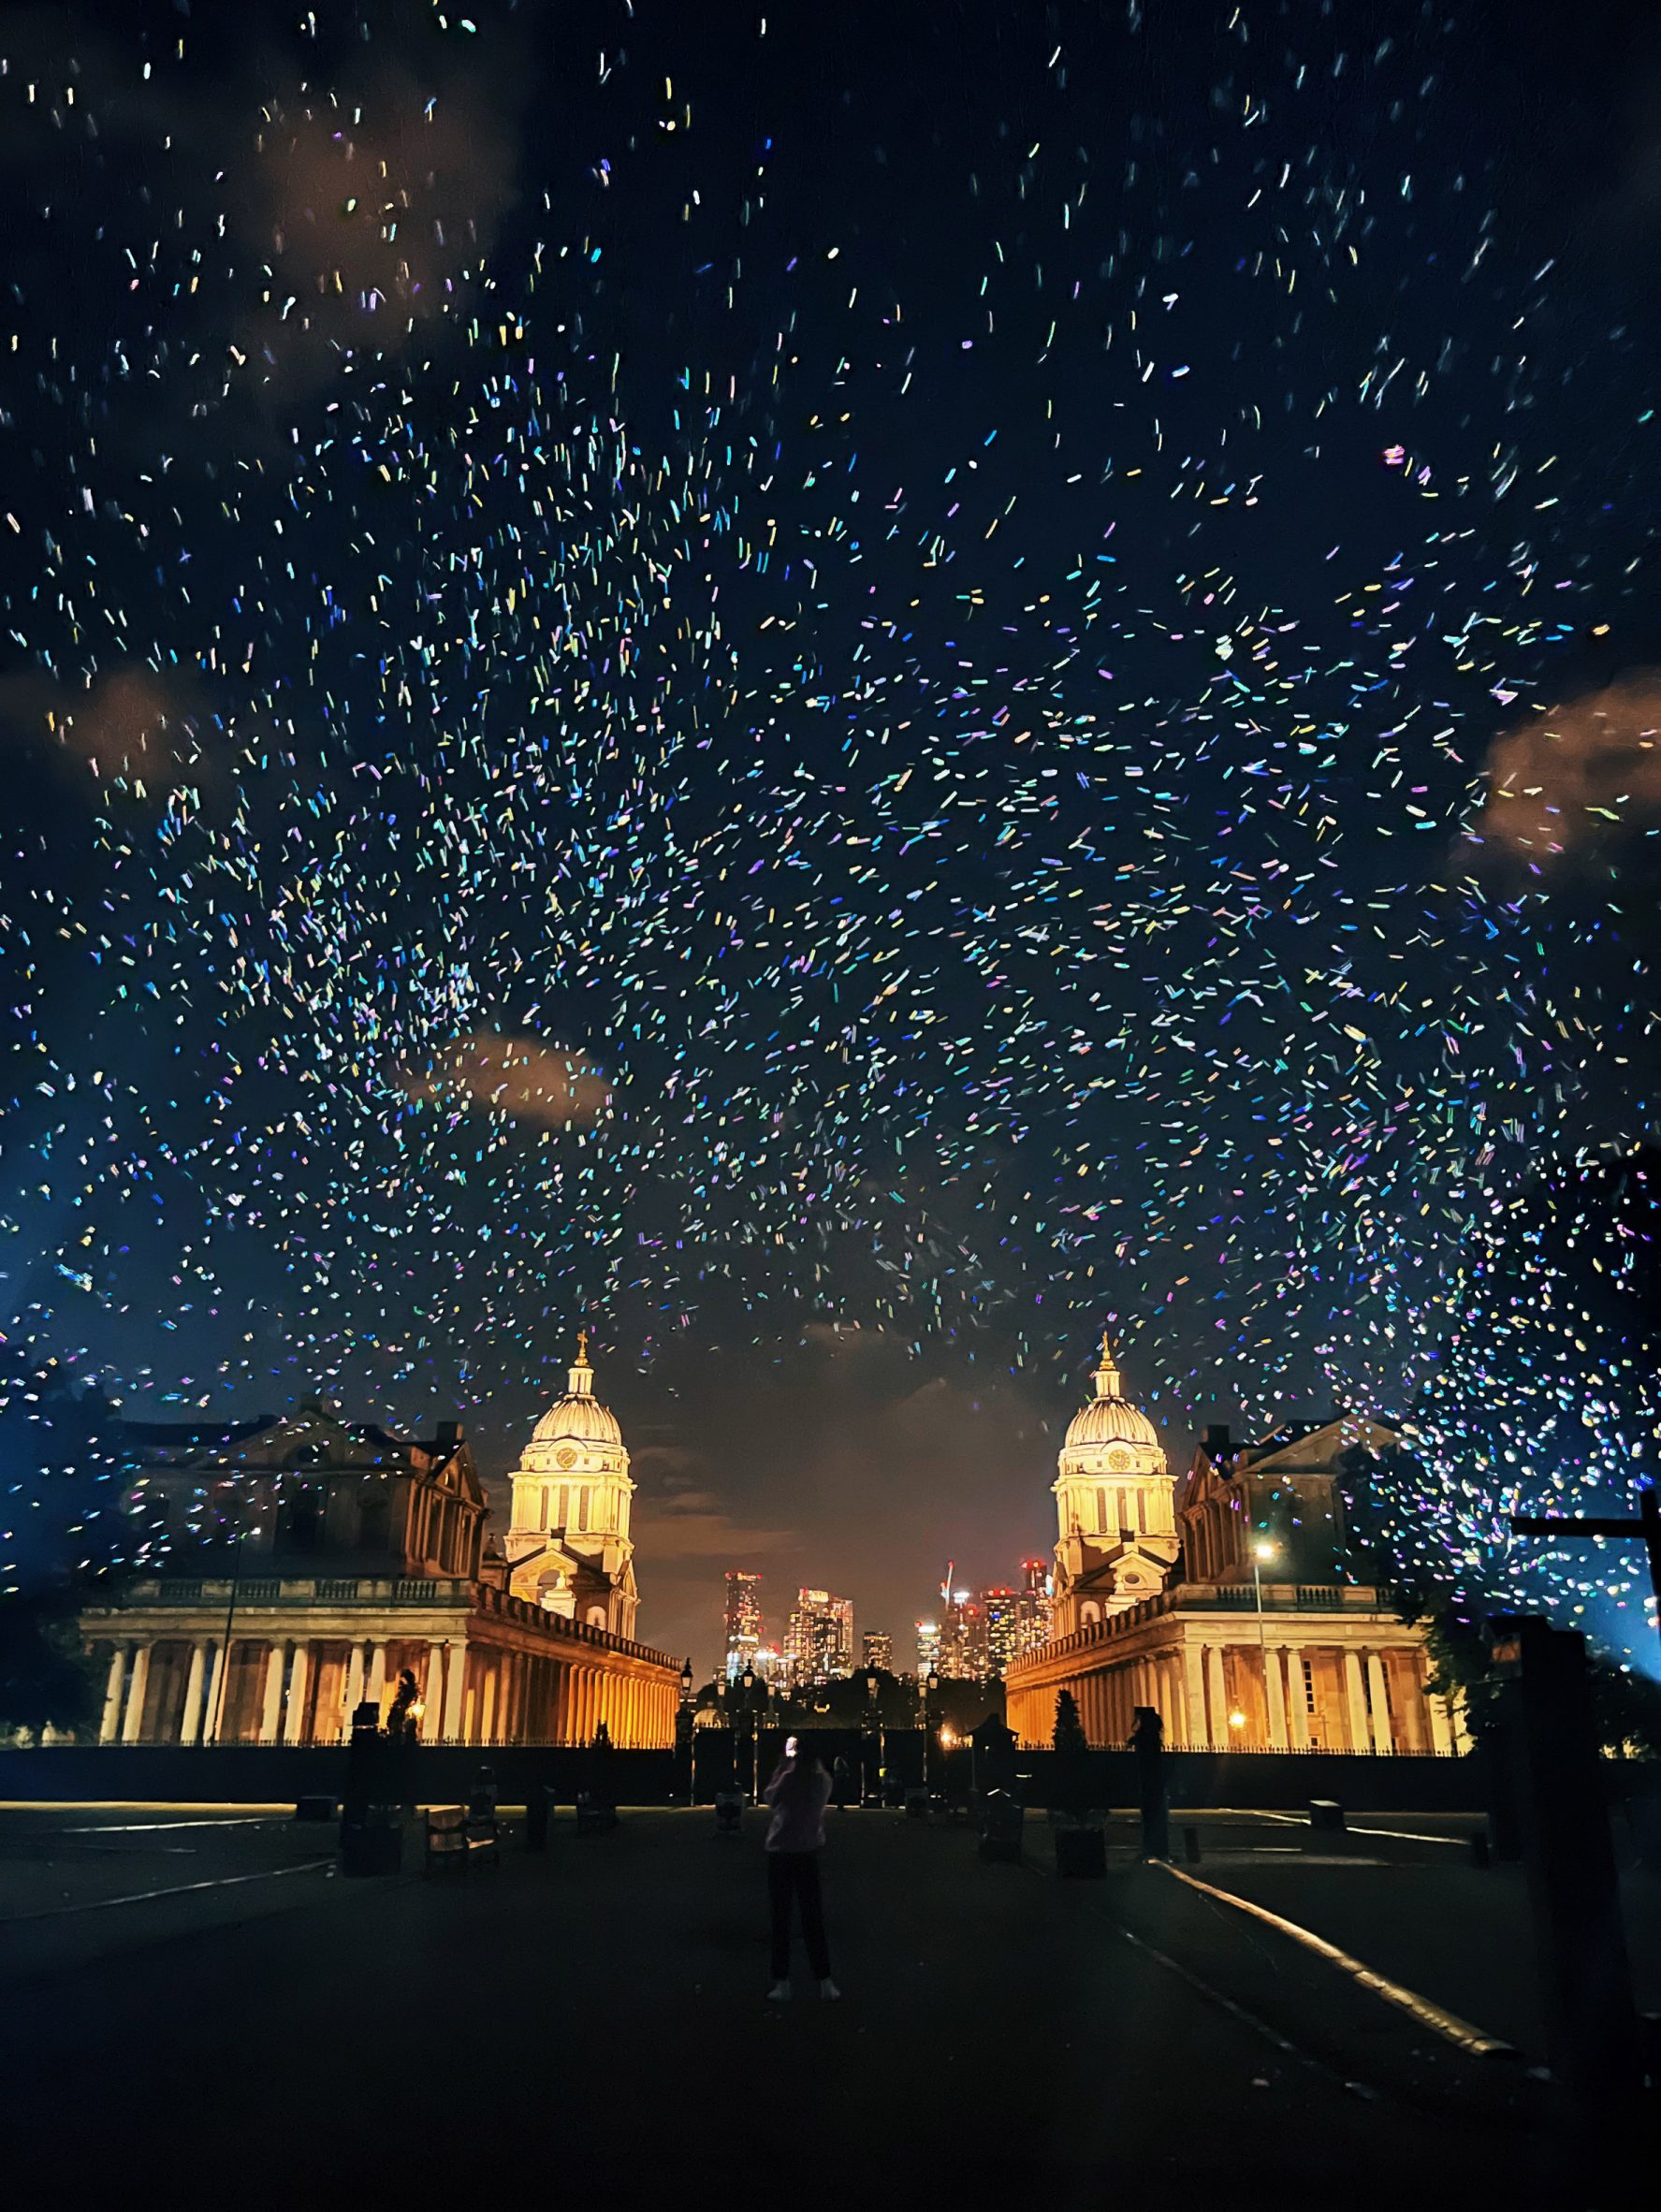 Floating biodegradeable fireworks in London